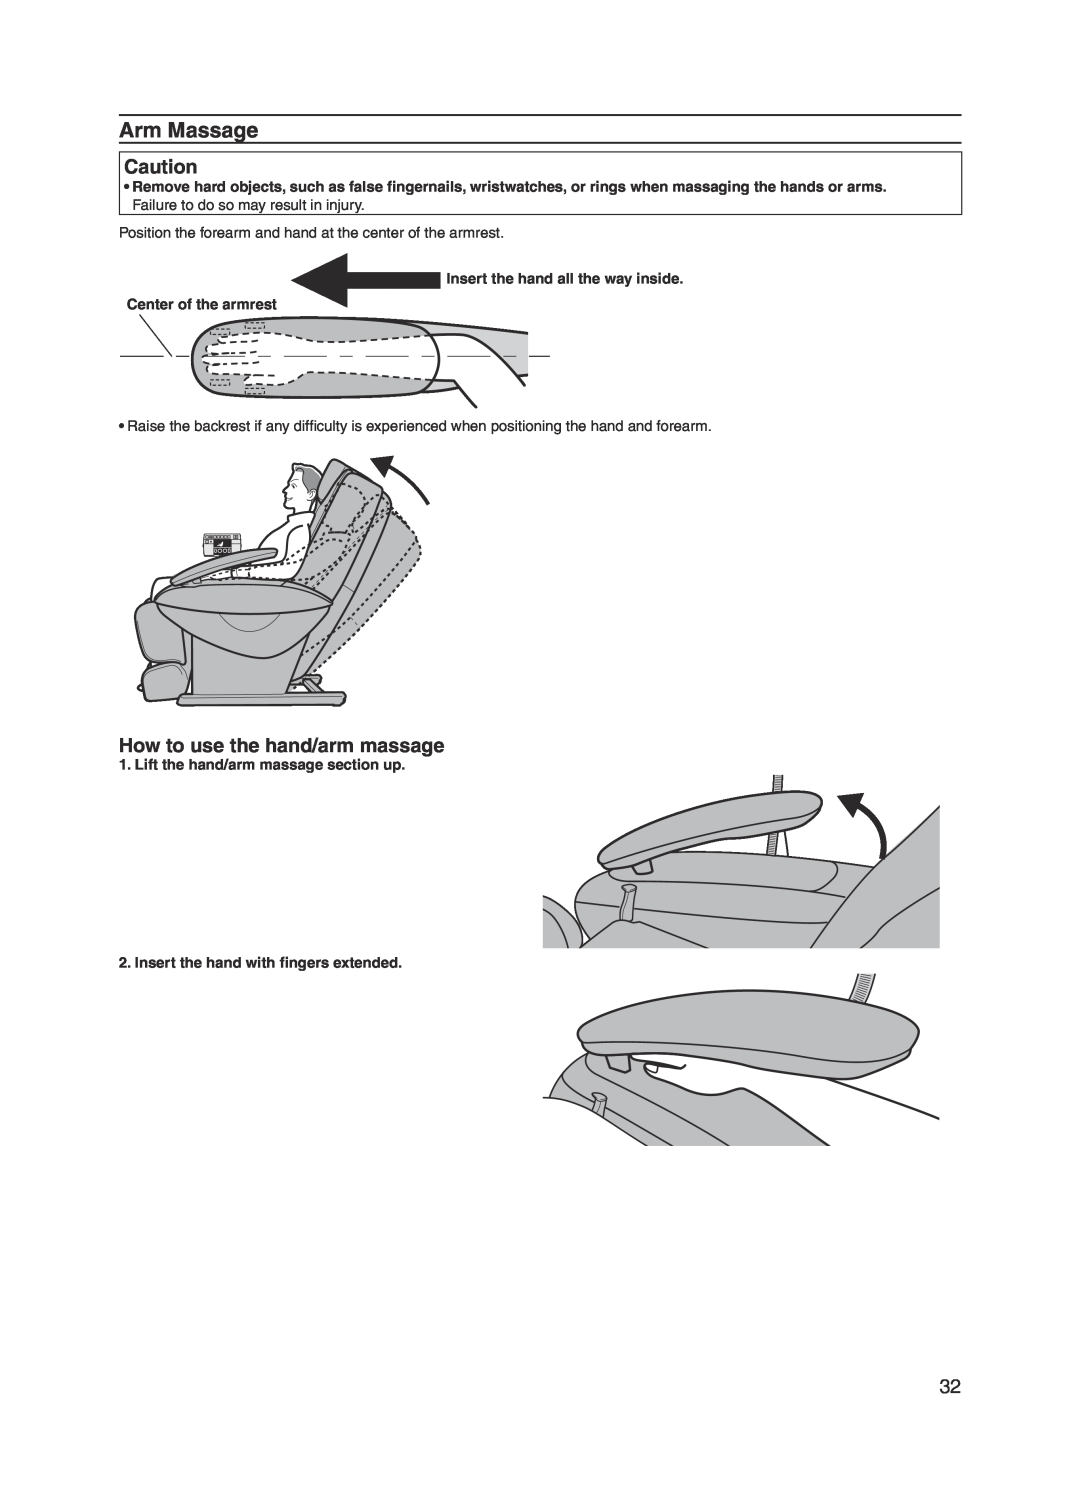 Panasonic EP30004 manual Arm Massage, How to use the hand/arm massage 